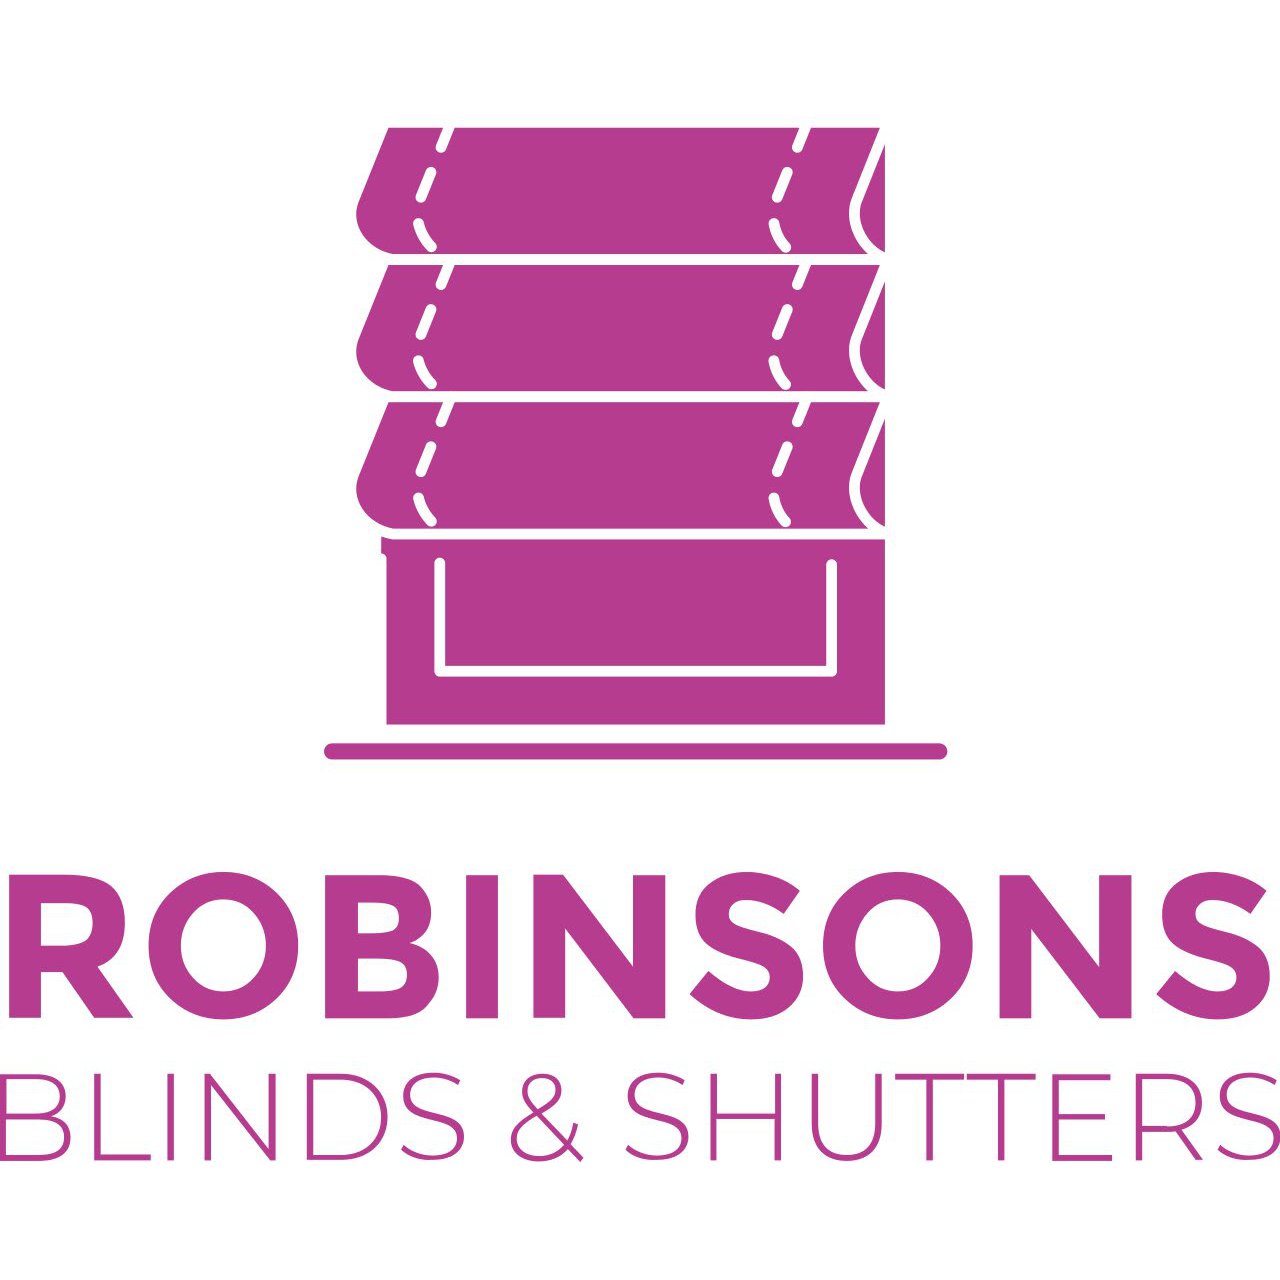 Robinsons Blinds & Shutters - Northampton, Northamptonshire NN1 2NQ - 01604 622380 | ShowMeLocal.com